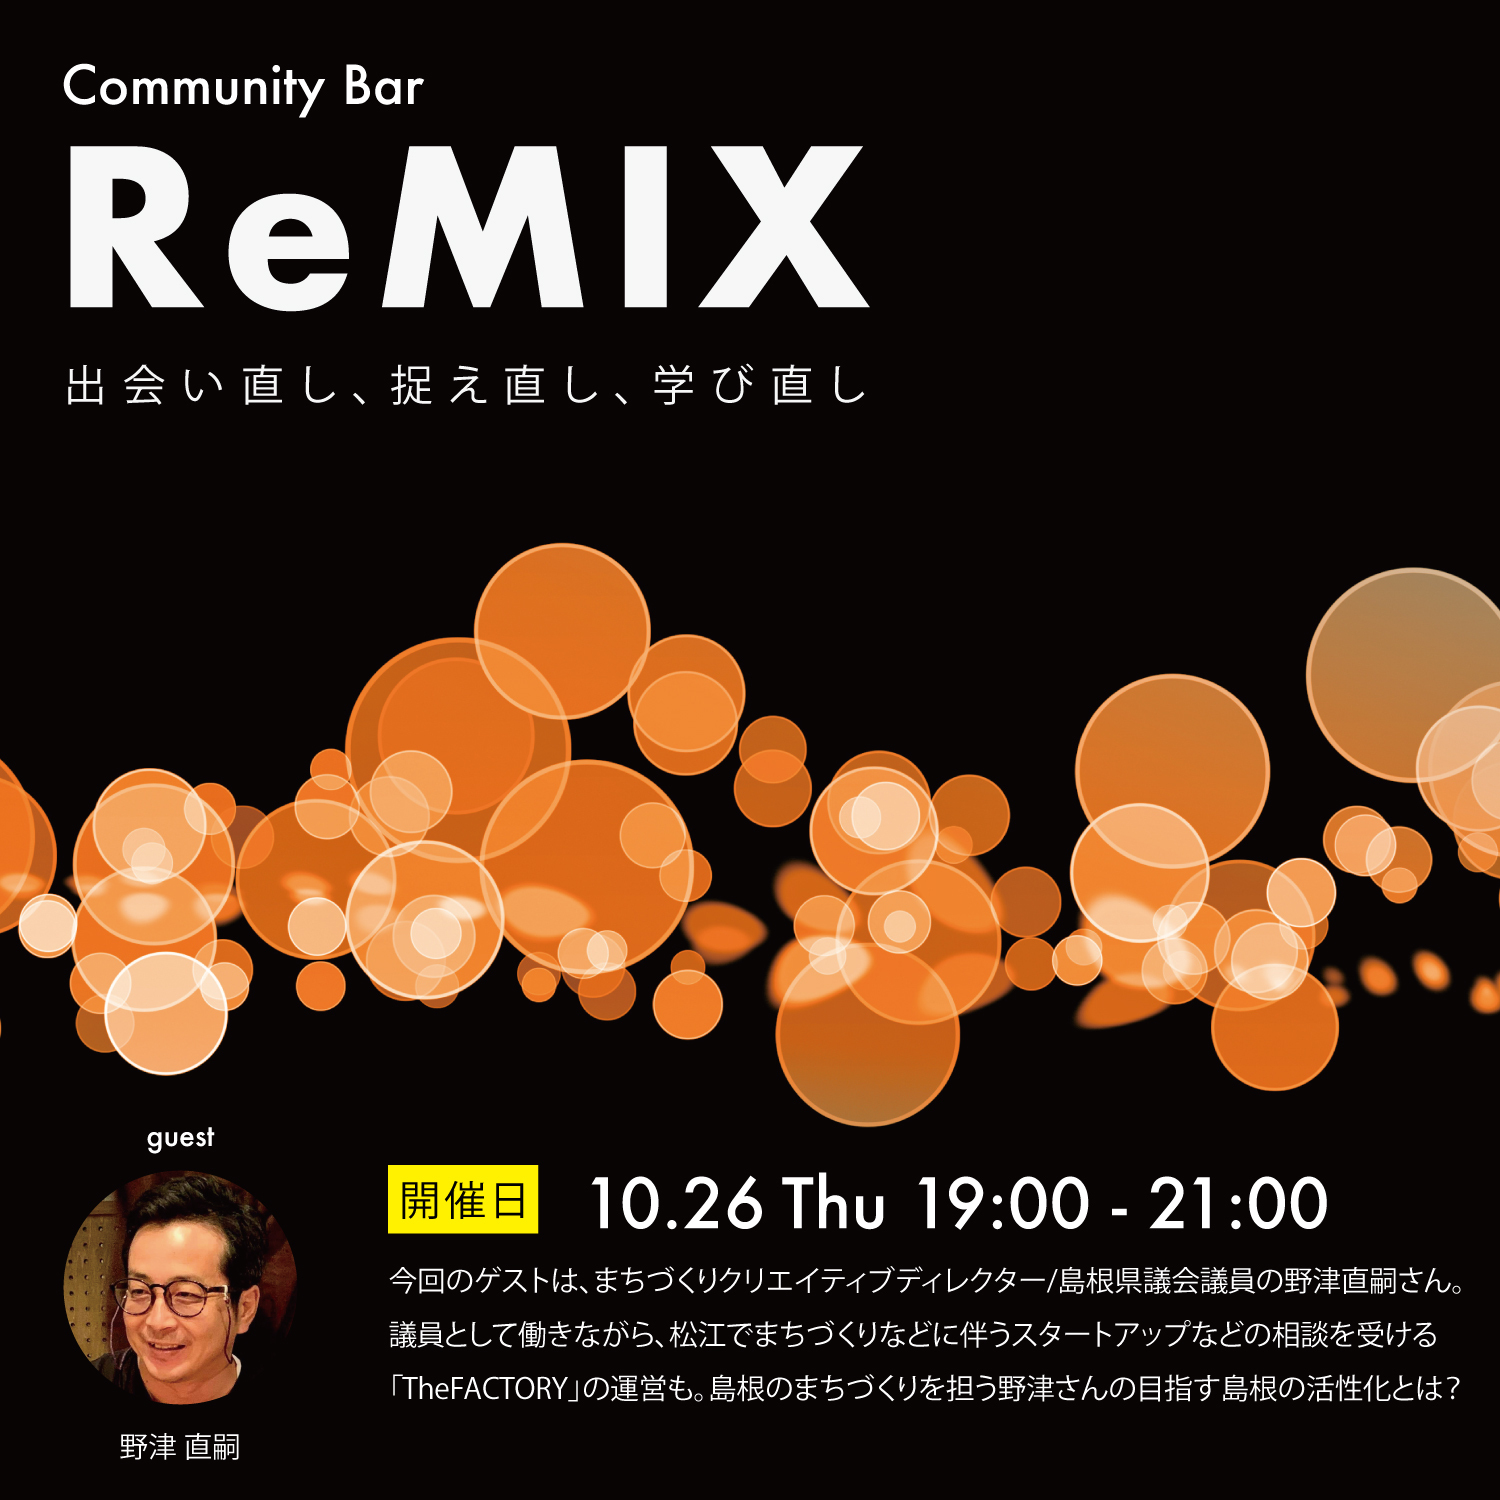 Community Bar ReMIX-出会い直し、捉え直し、学び直し-